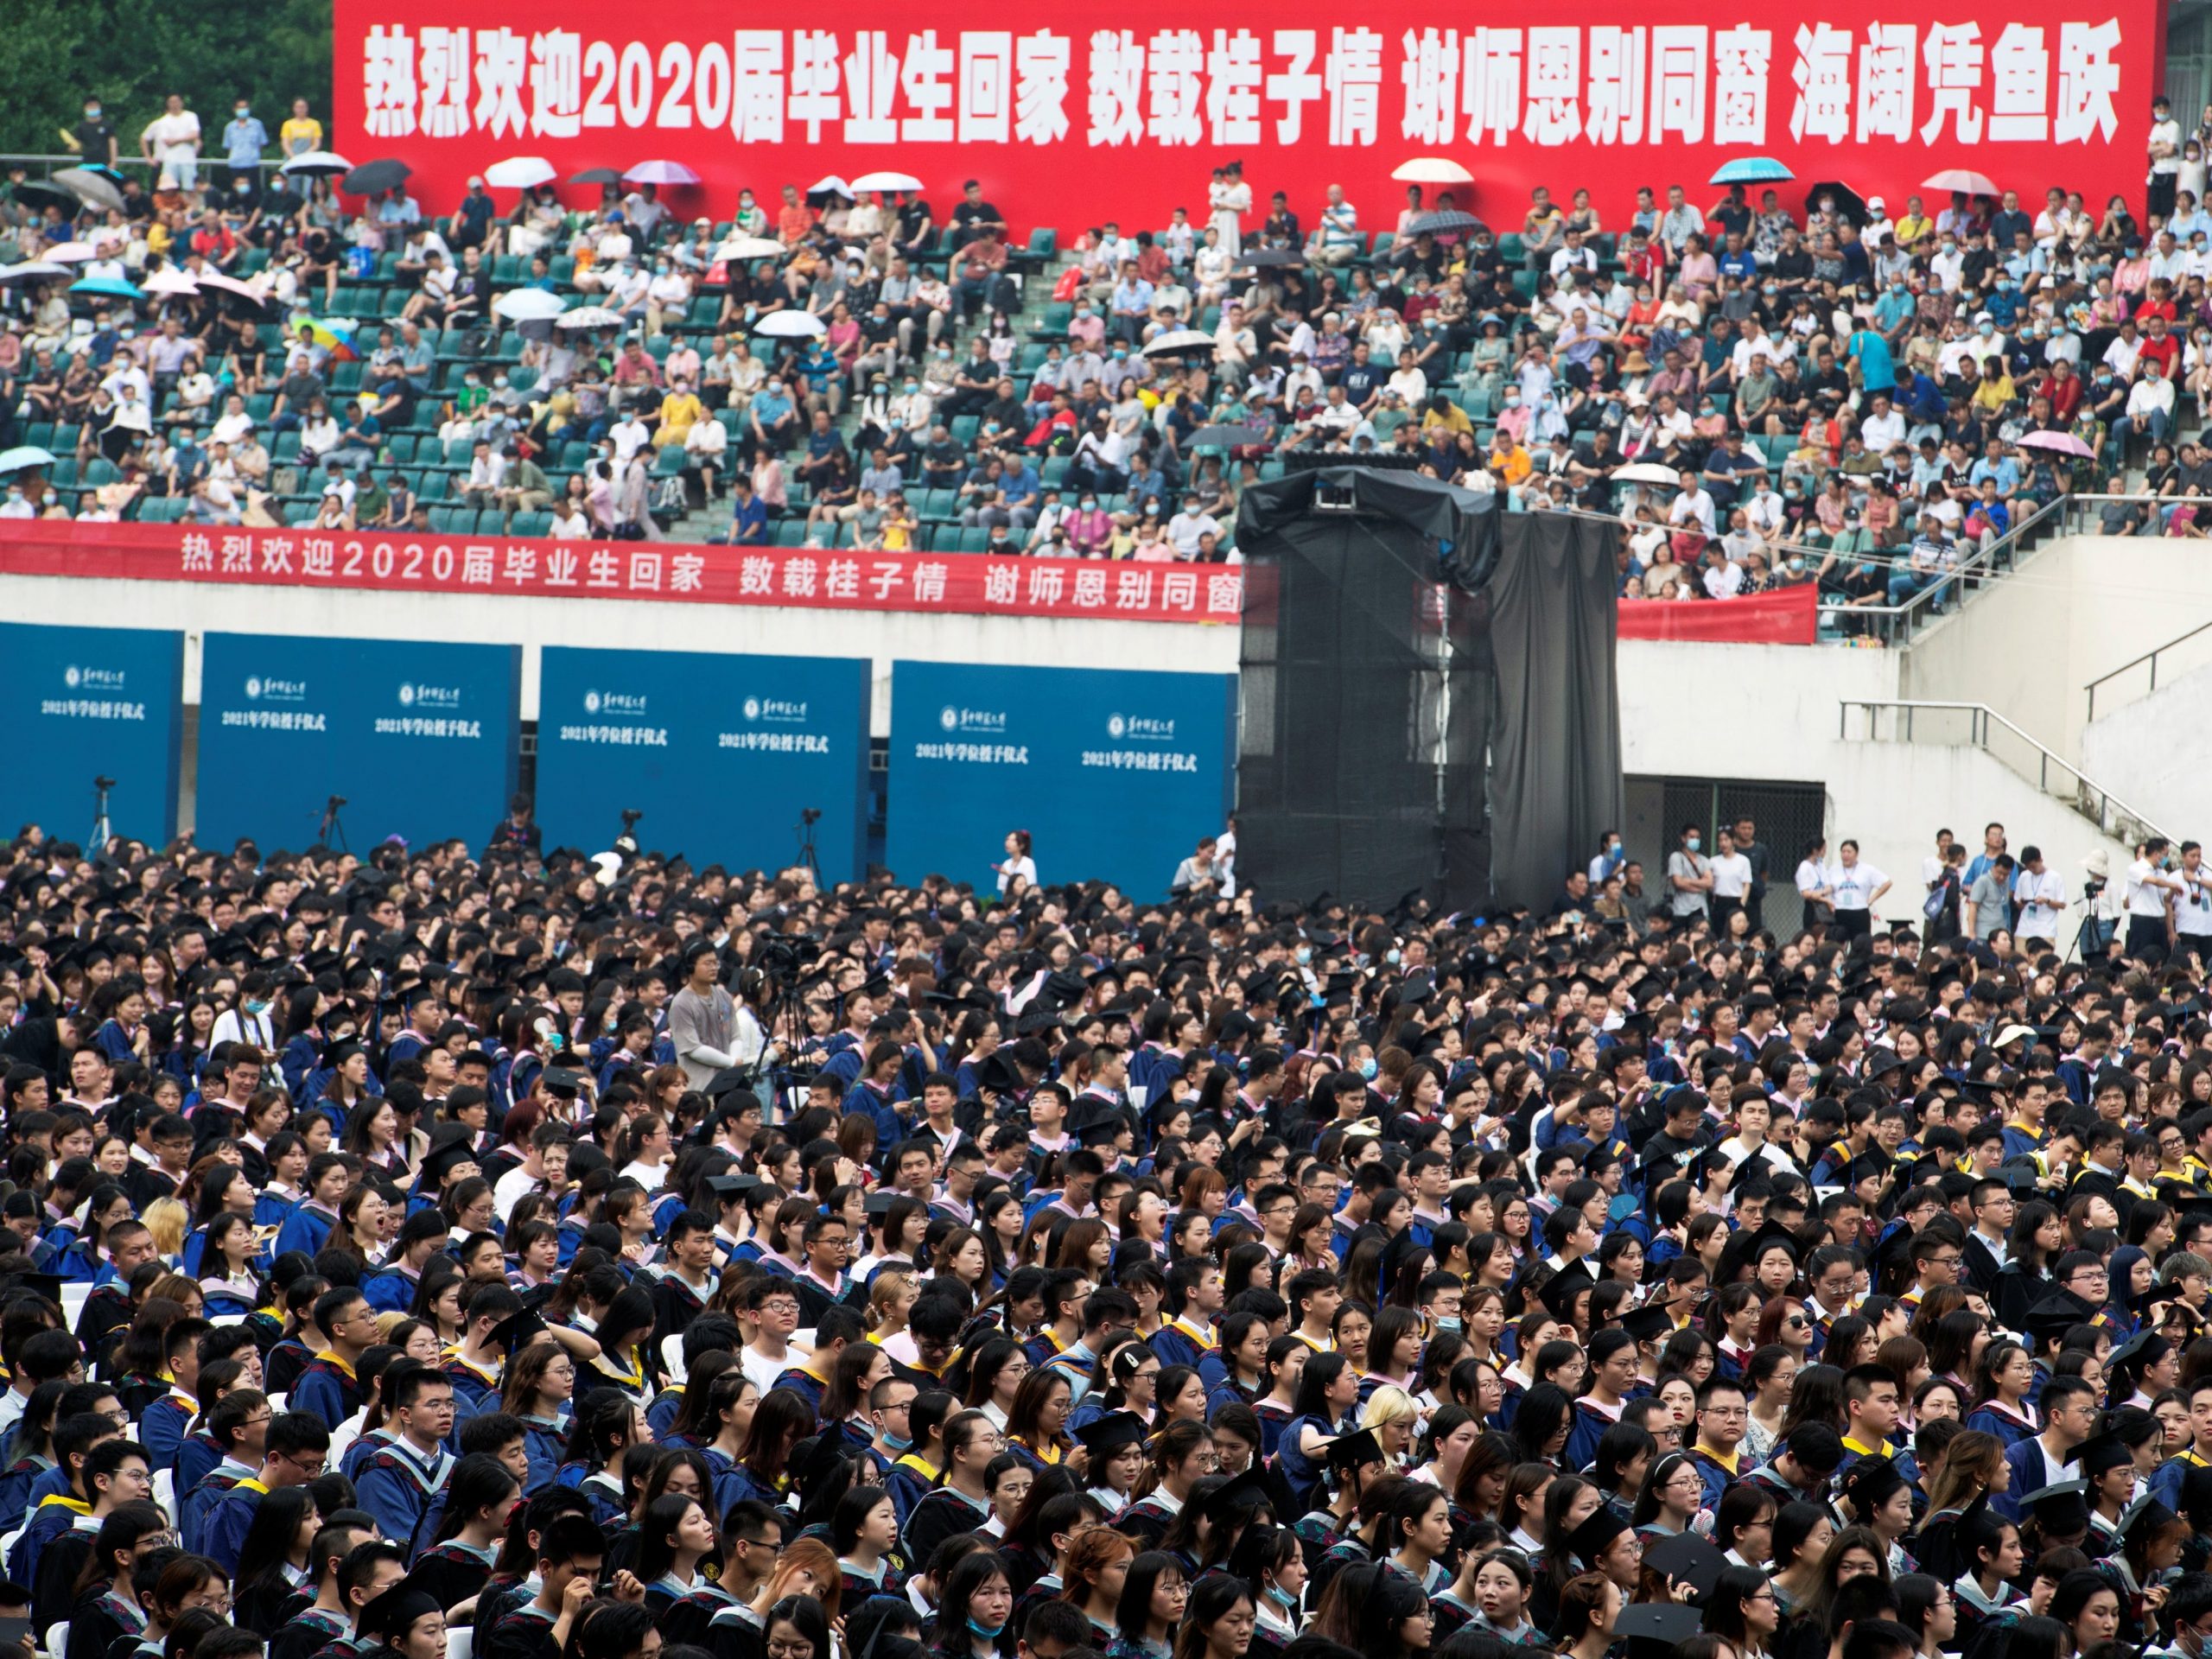 wuhan university grads pour into stadium